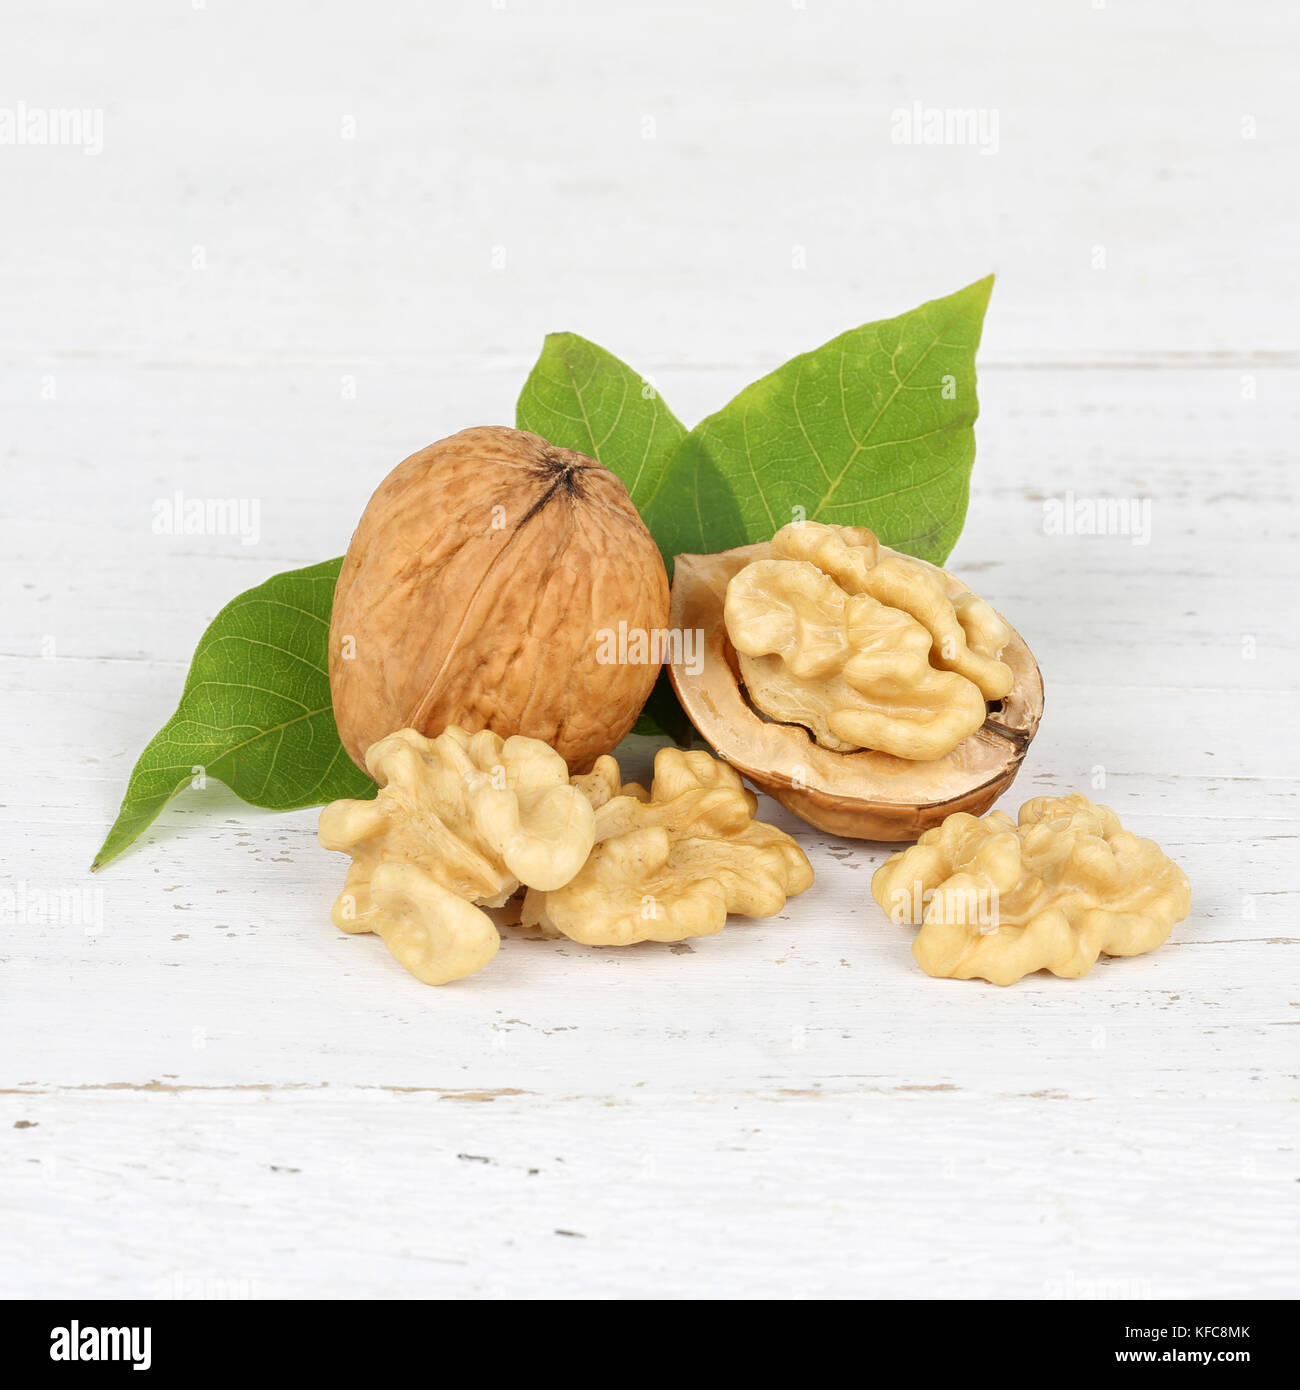 Walnuts walnut nuts nut nutshell square on wooden board food Stock Photo